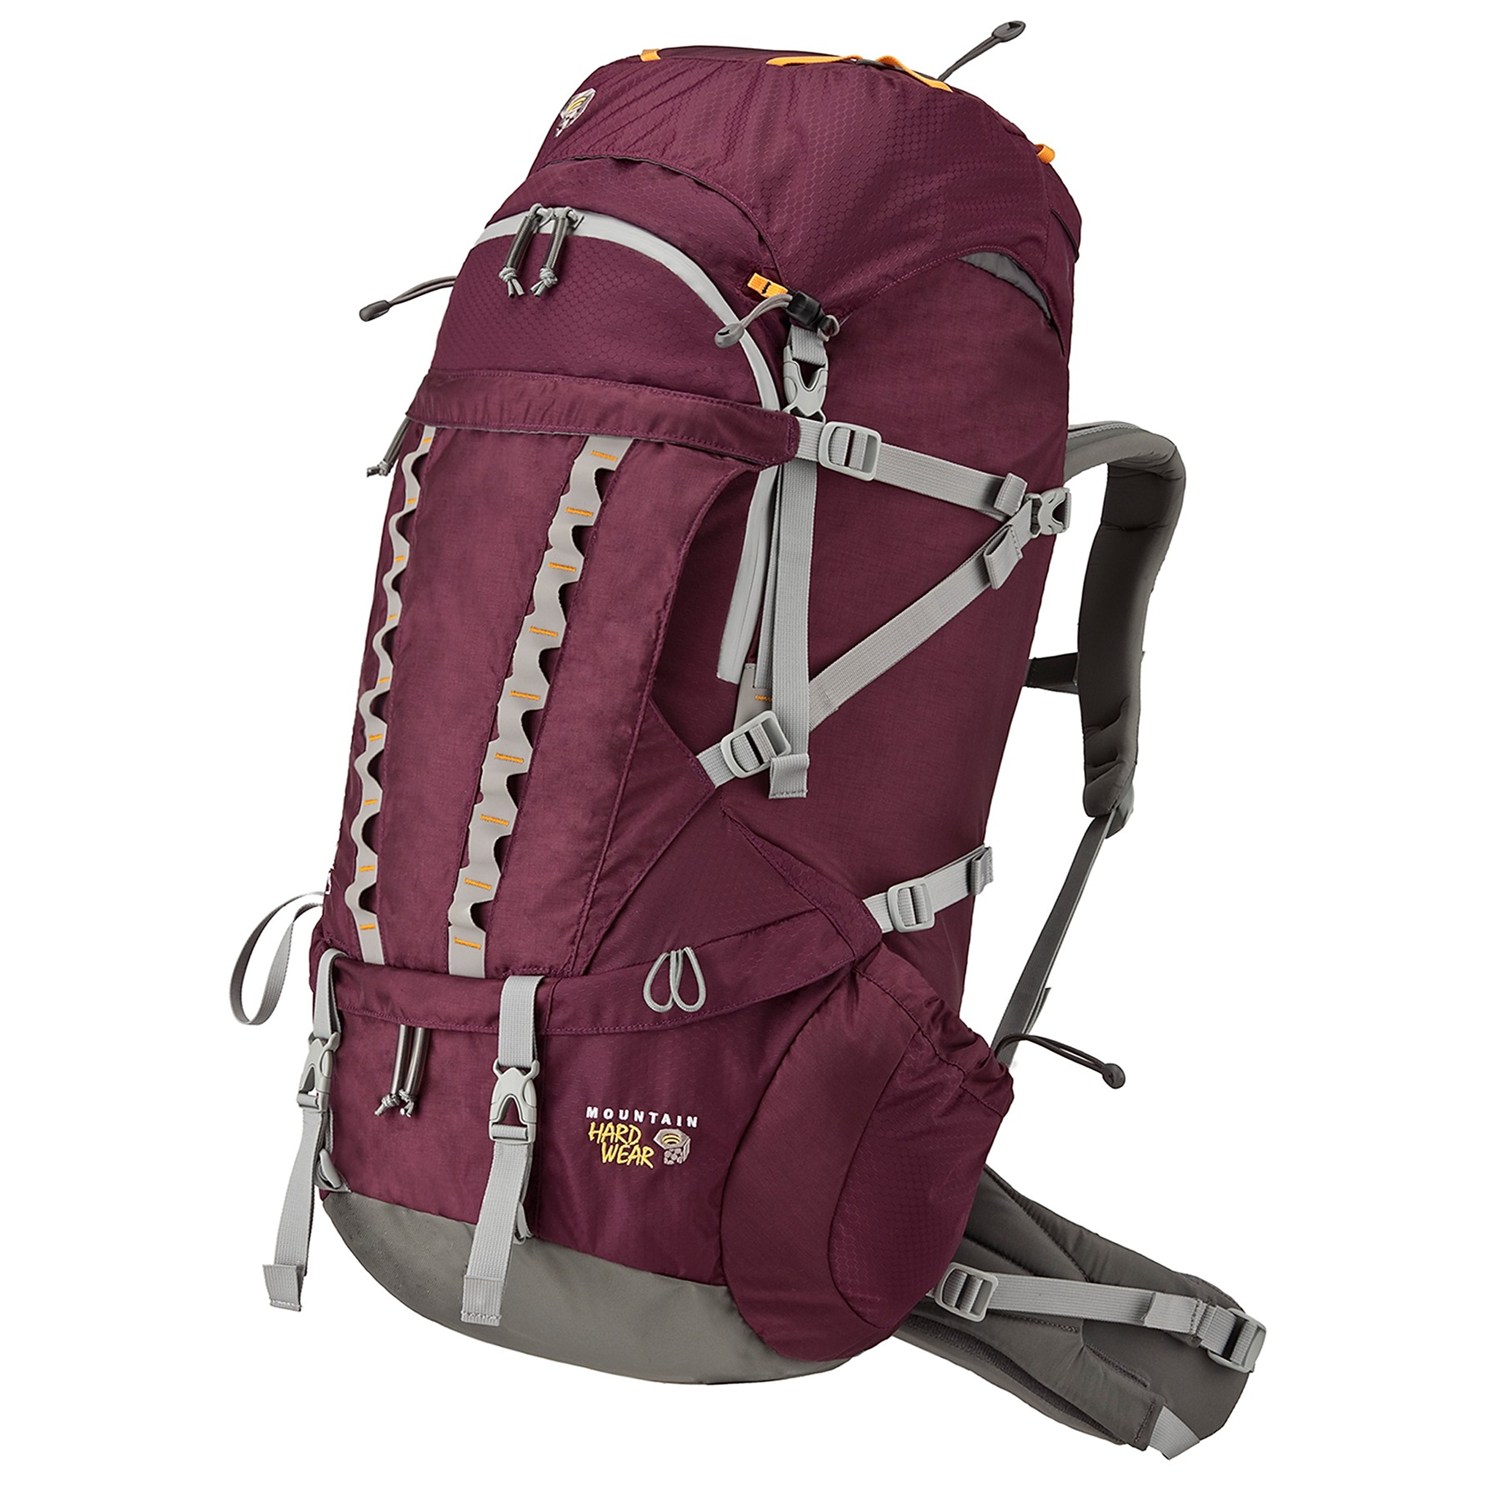 Packs, Backpacks, & Daypacks up to 54% off at Sierra Trading Post